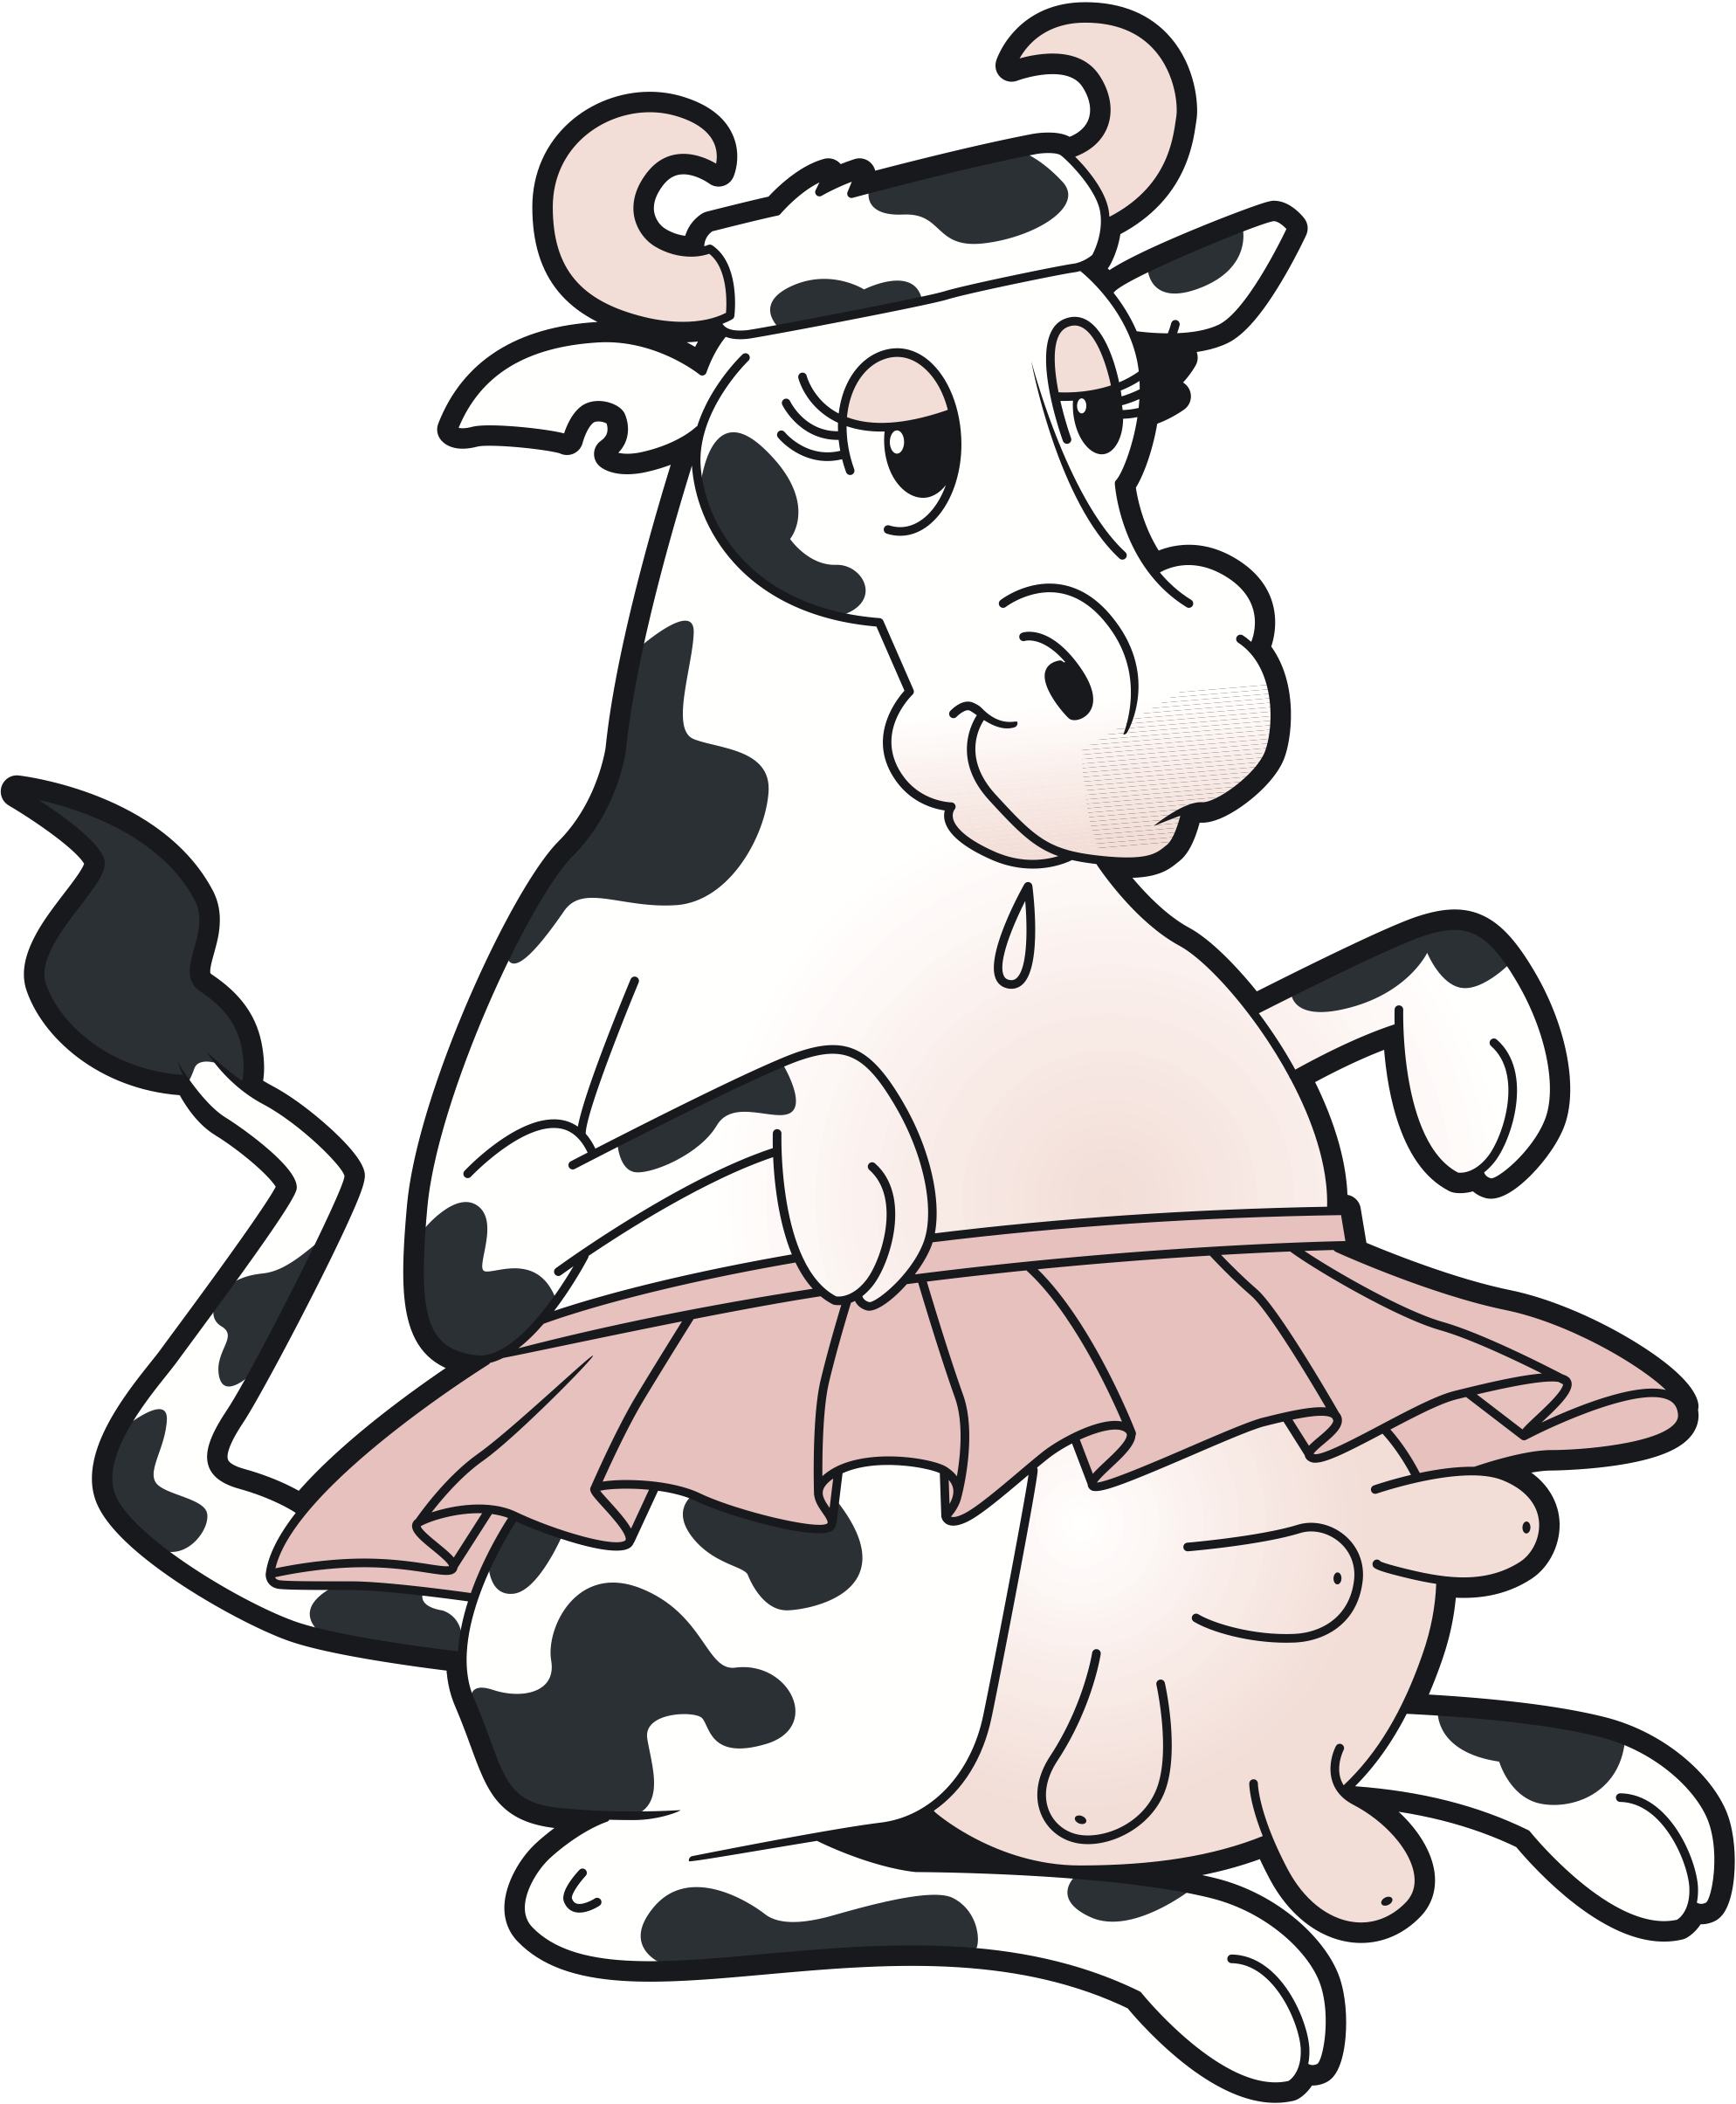 Images Of Cartoon Cows | Free Download Clip Art | Free Clip Art ...